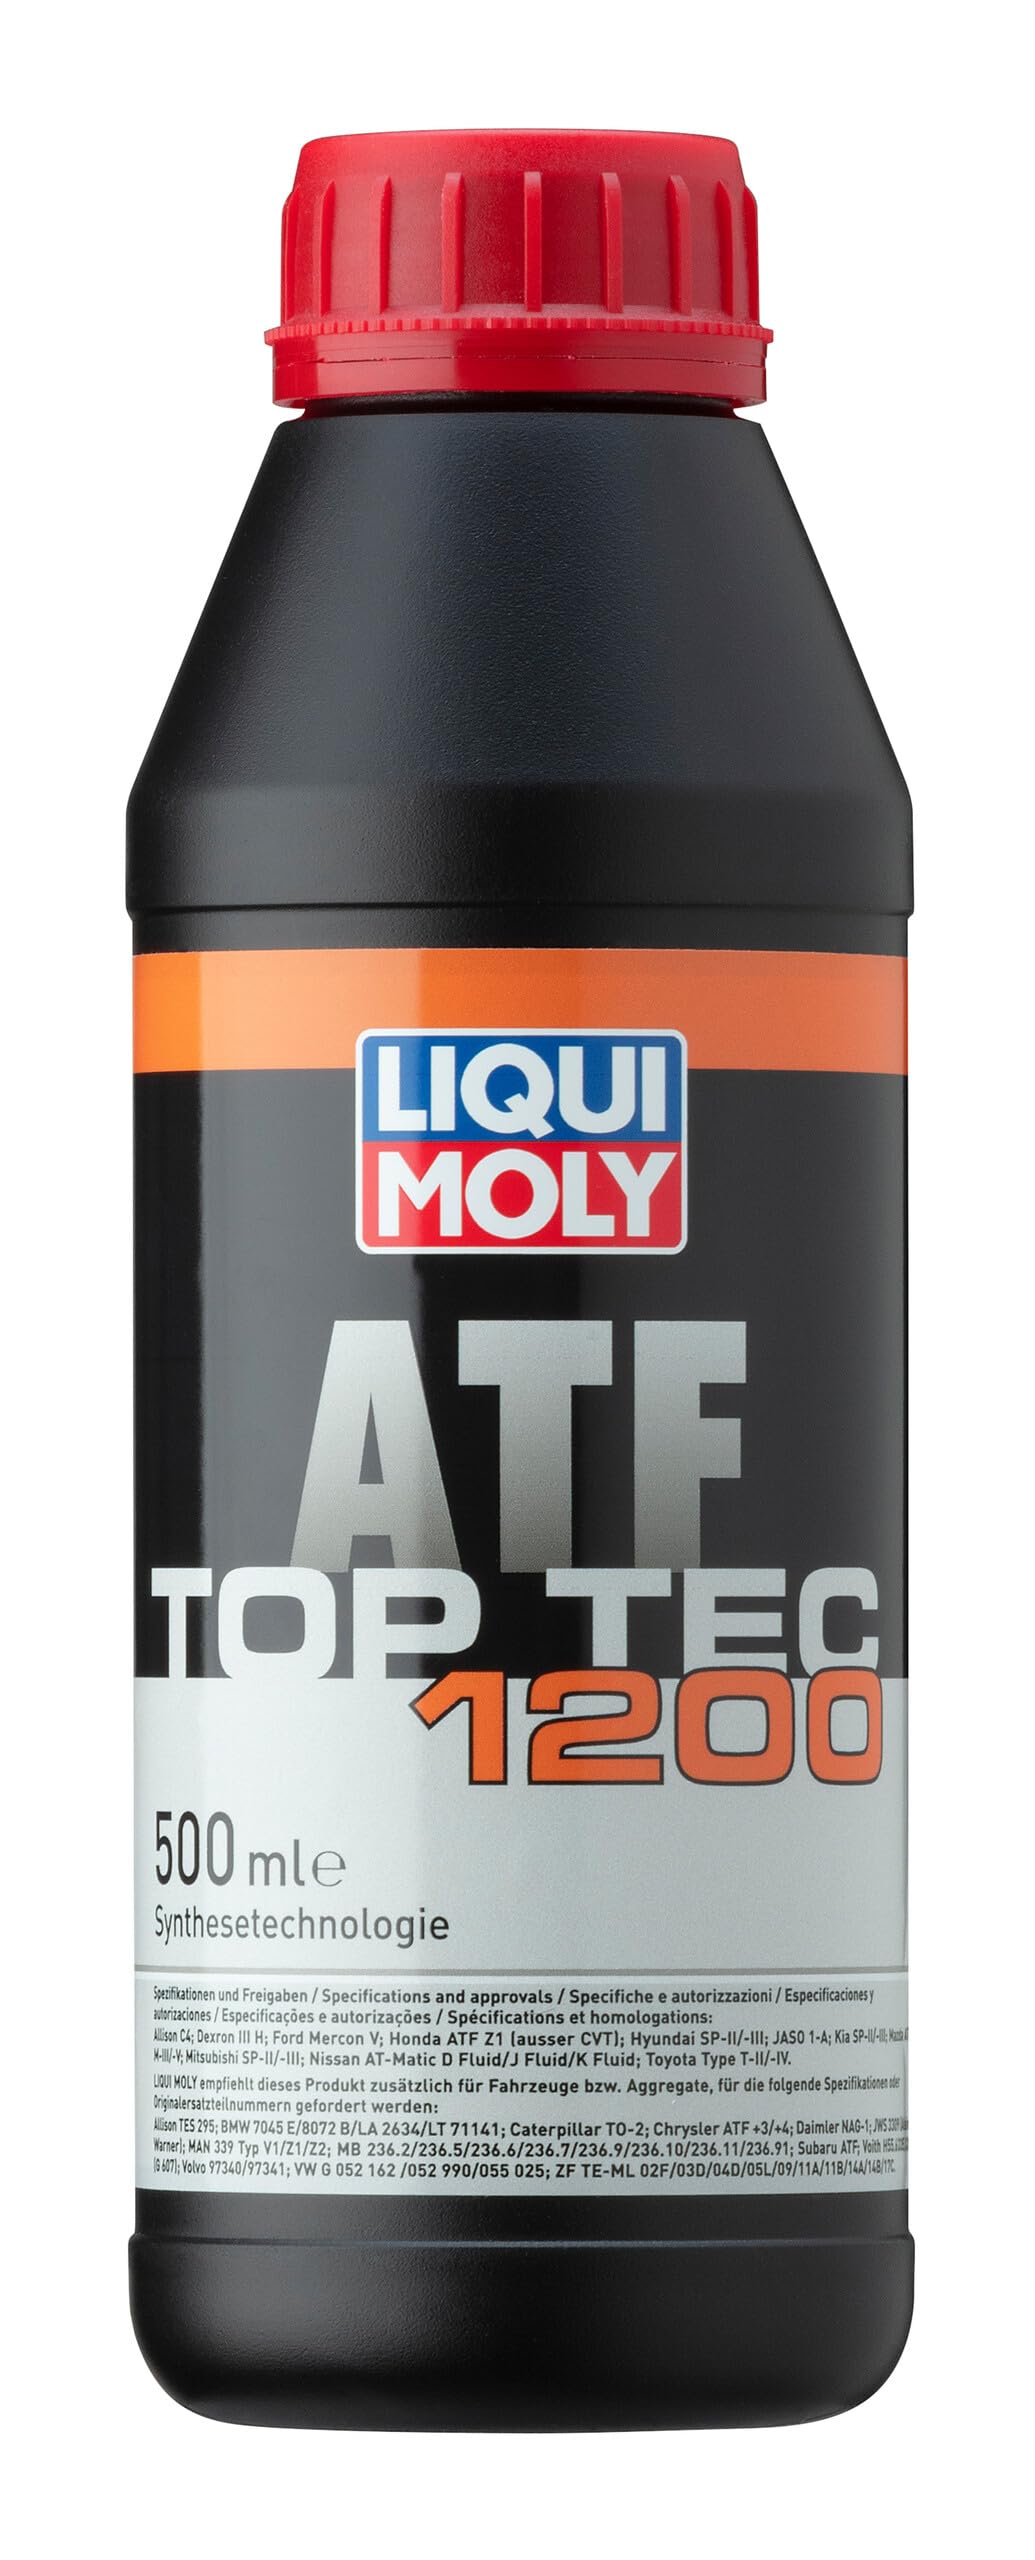 LIQUI MOLY Top Tec ATF 1200 | 500 ml | Getriebeöl | Hydrauliköl | Art.-Nr.: 3680 von Liqui Moly